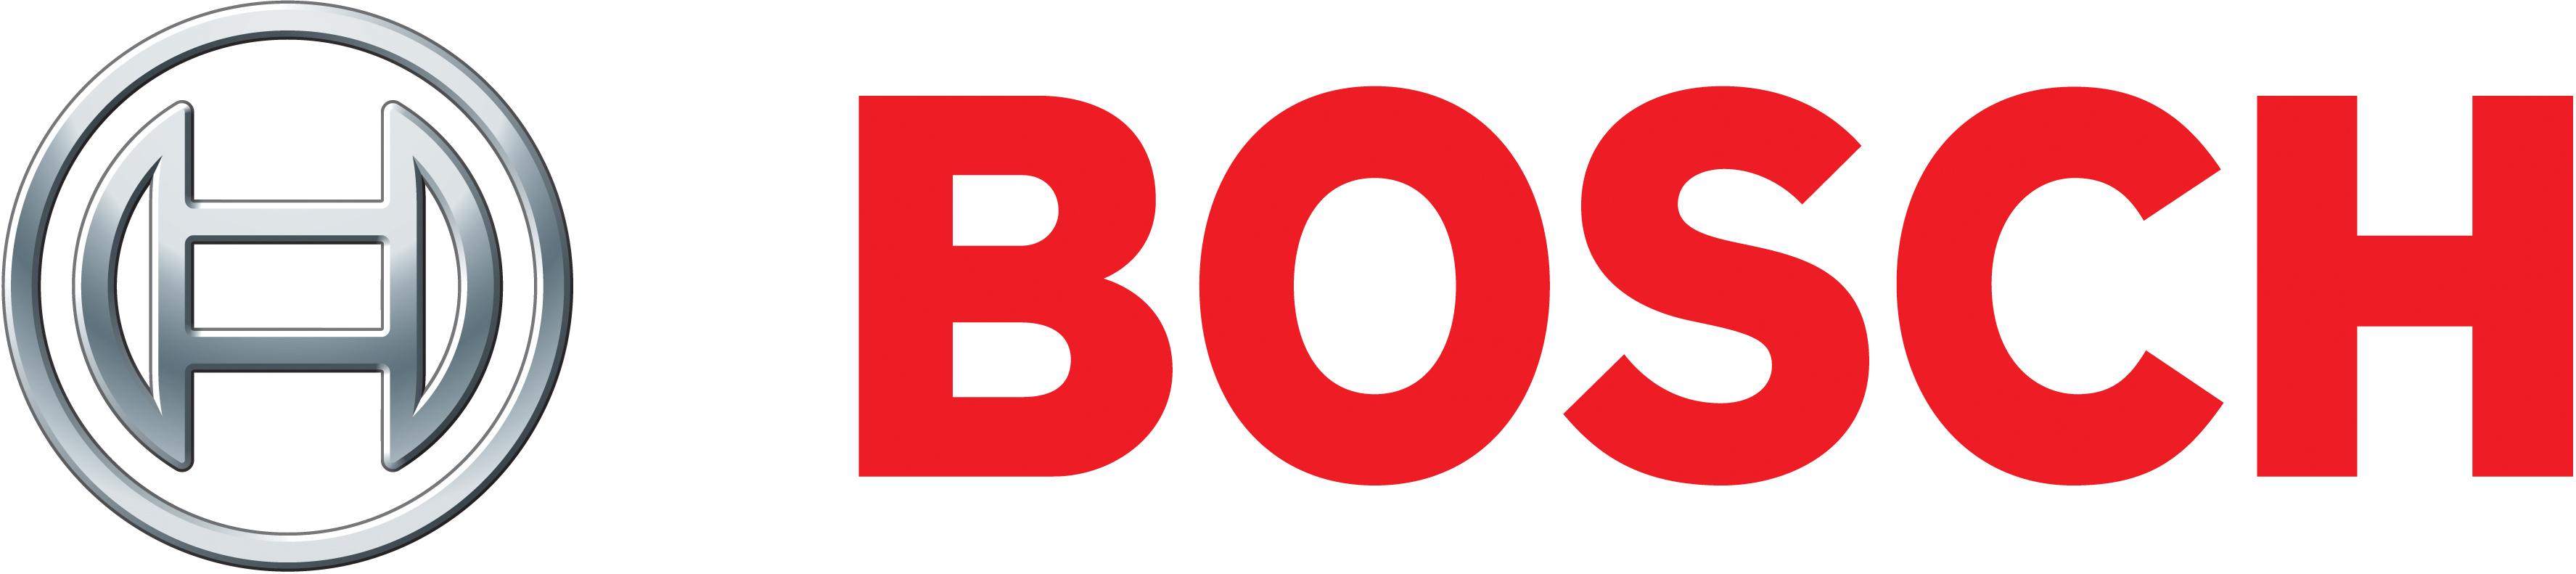 Bosch logo Download in HD Quality